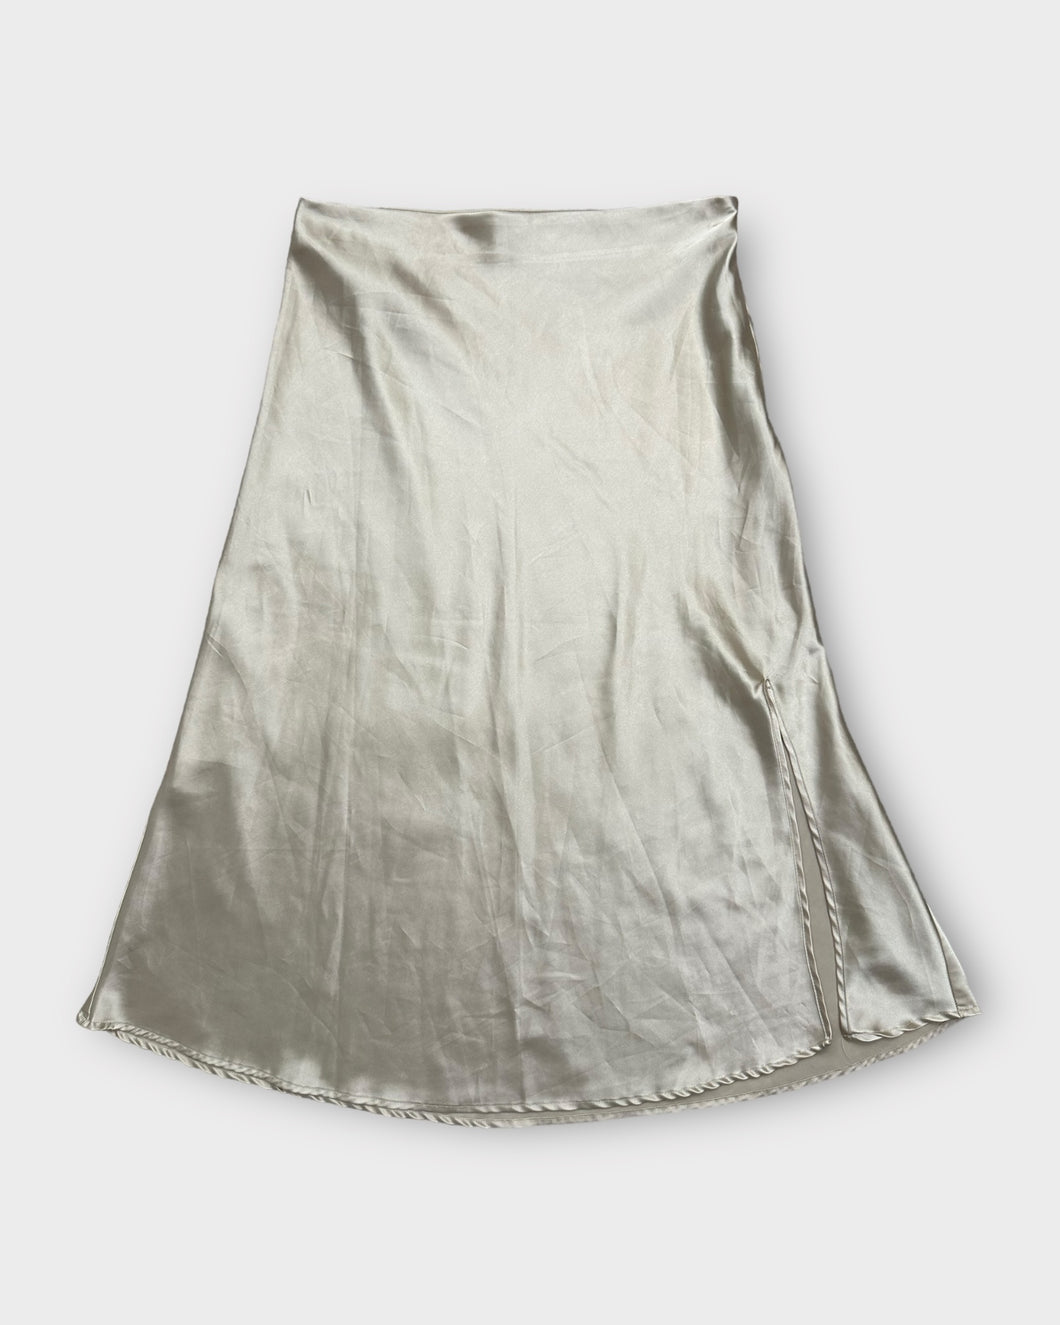 Champagne Satin Midi Skirt with a Slit (L)